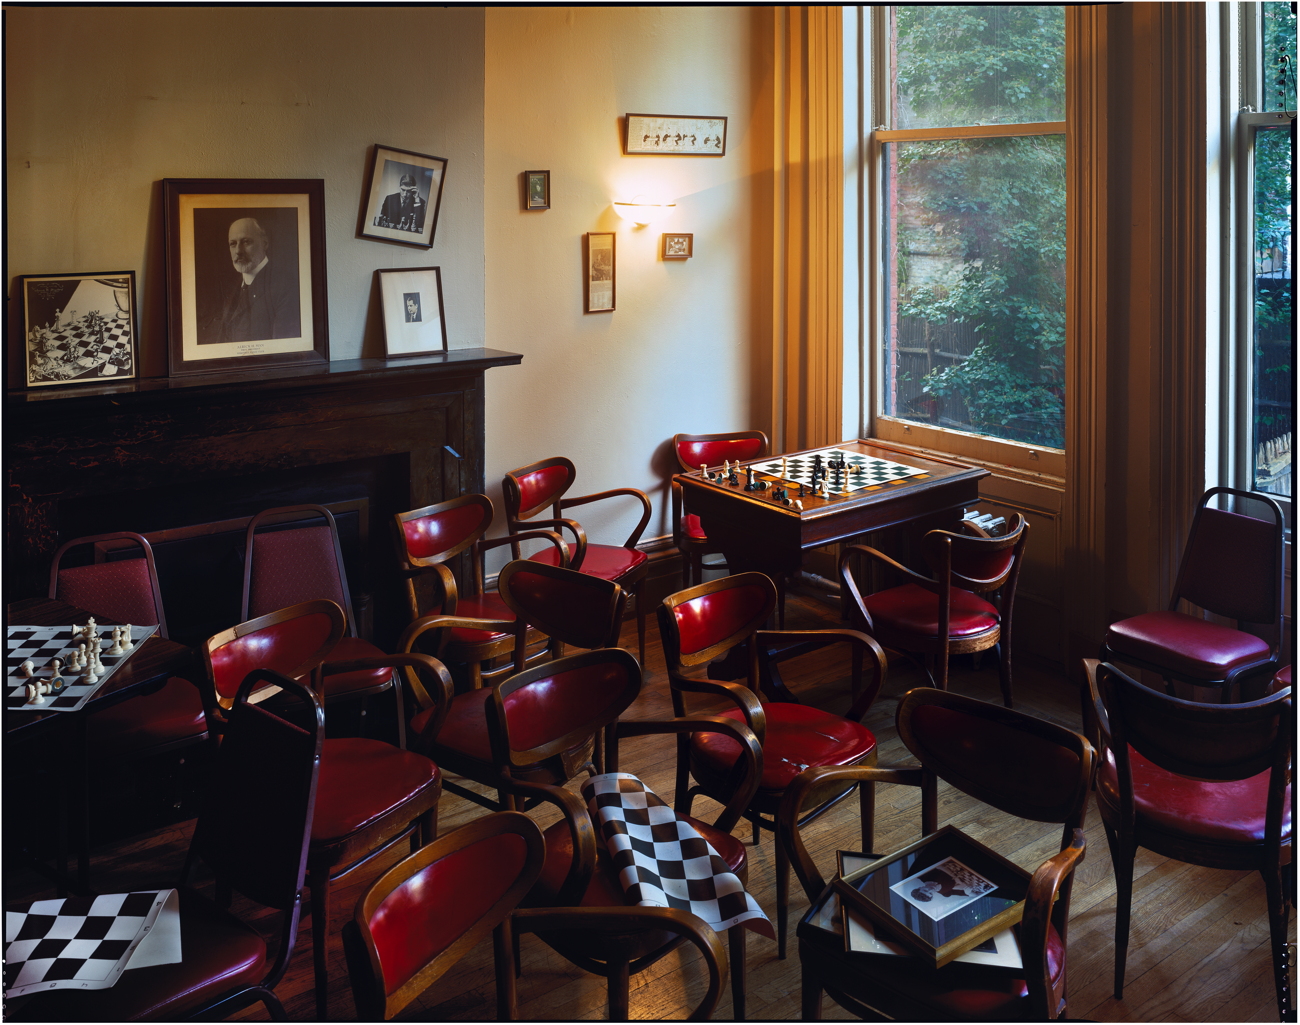 Marshall Chess Club, New York City, 2003